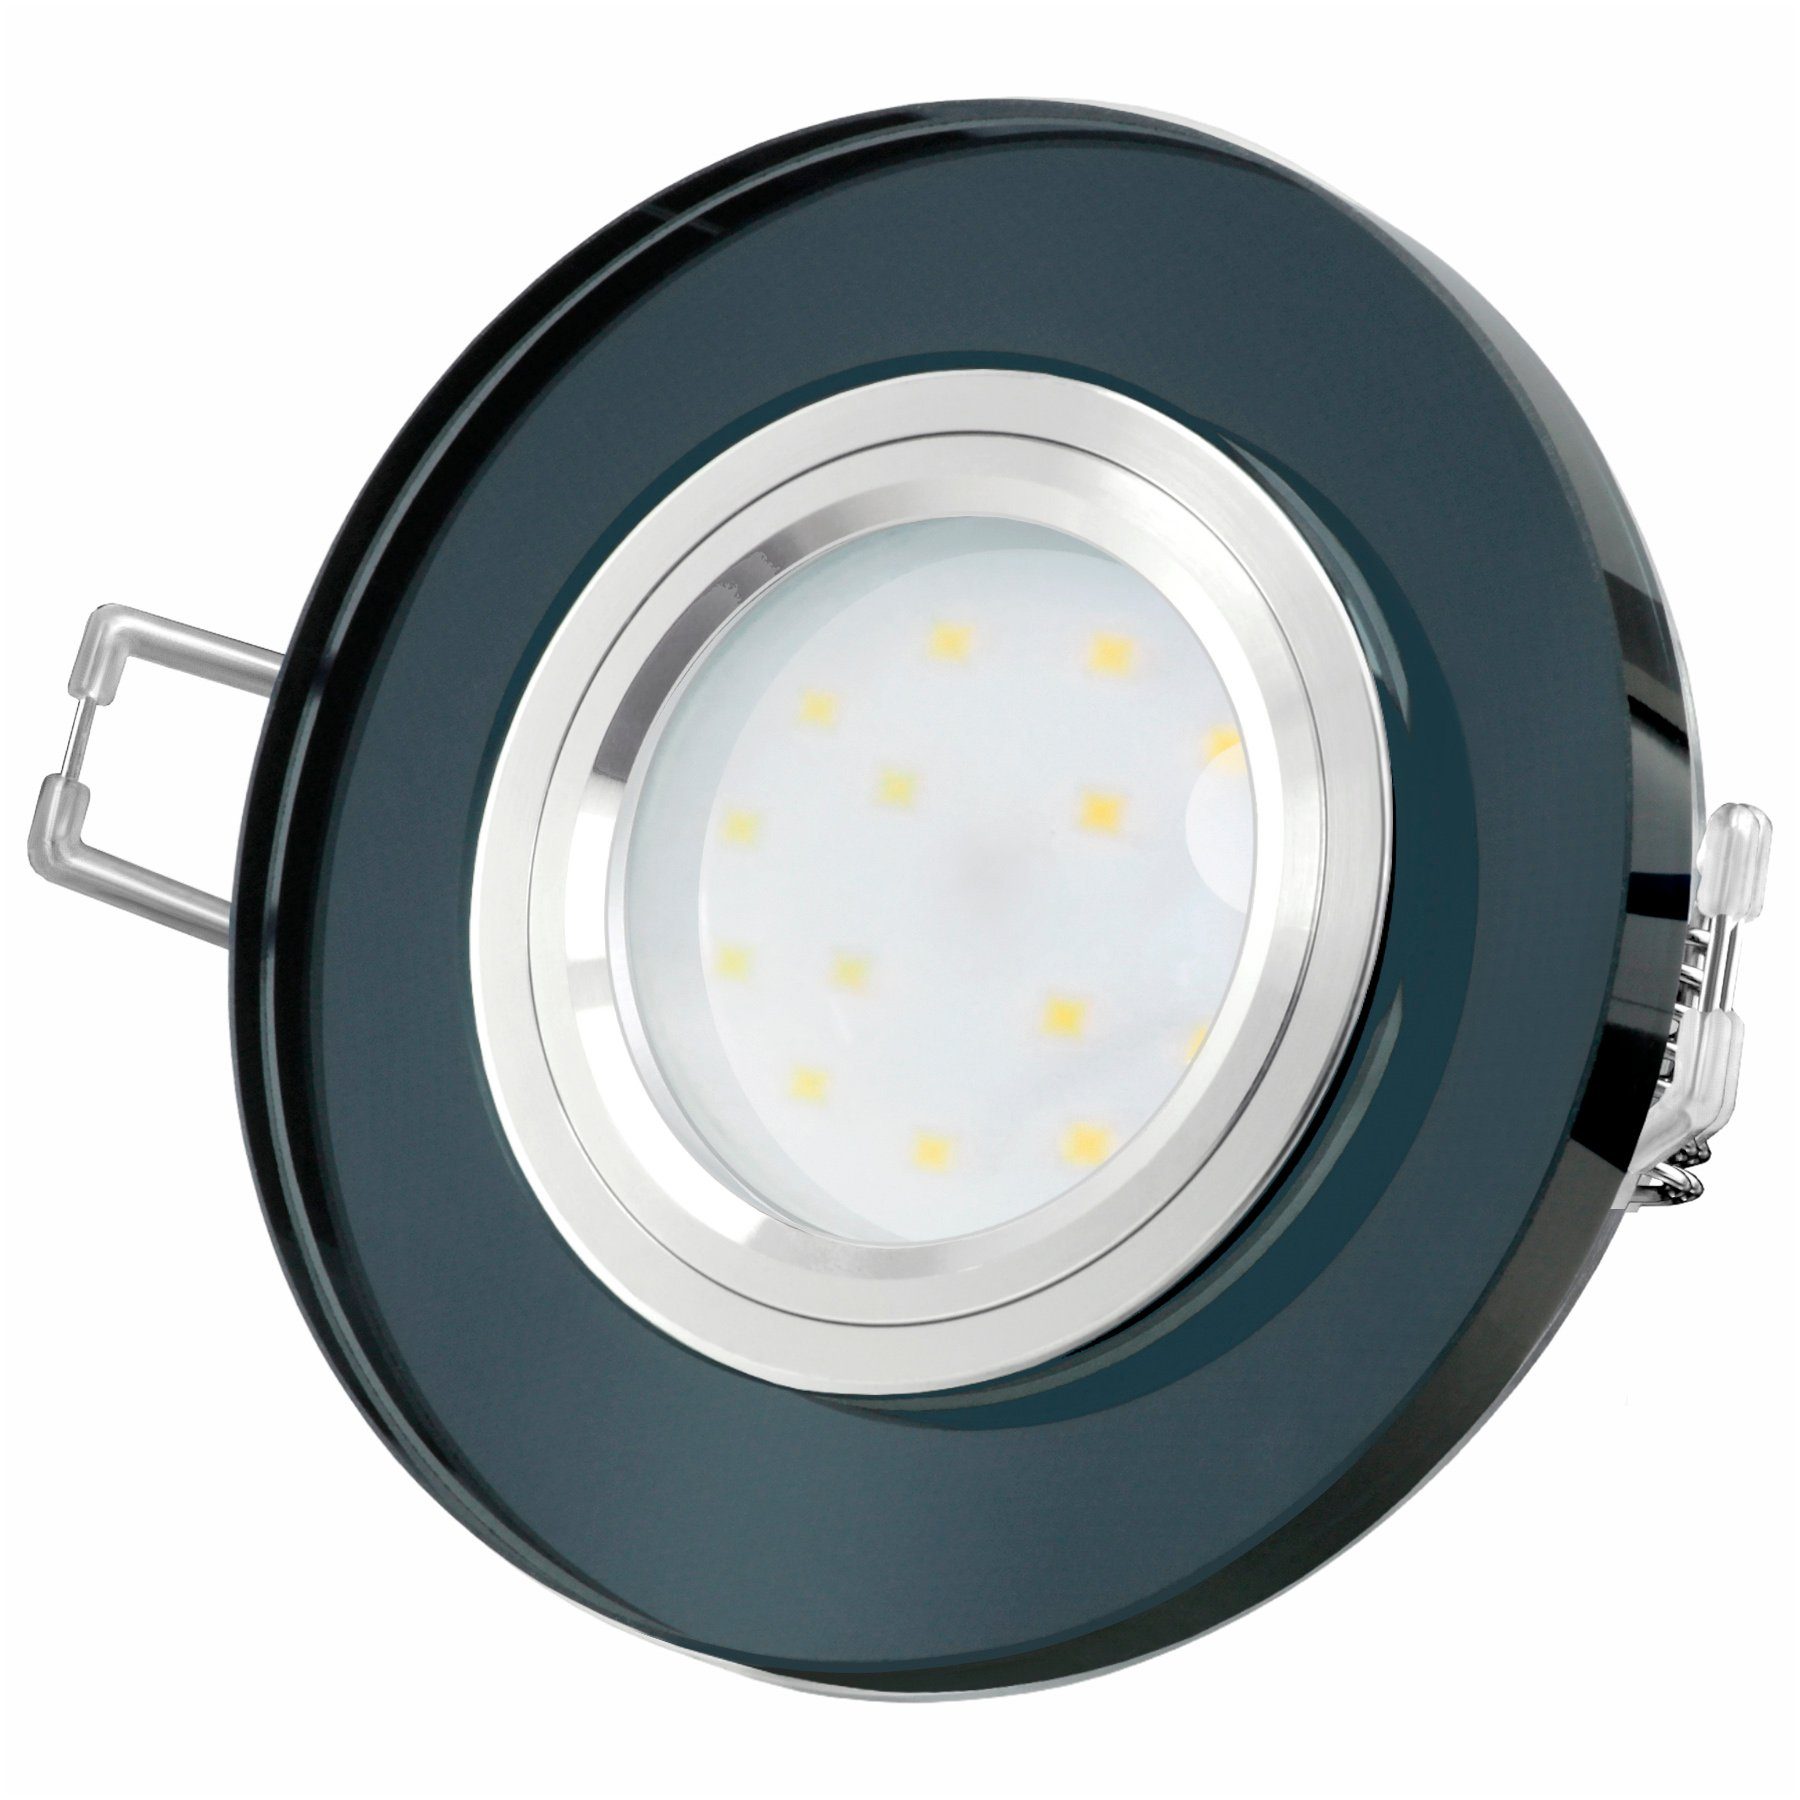 SSC-LUXon LED Einbaustrahler Glas fourSTEP rund, LED-Einbaustrahler LED, schwarz spiegelnd, flach, Neutralweiß